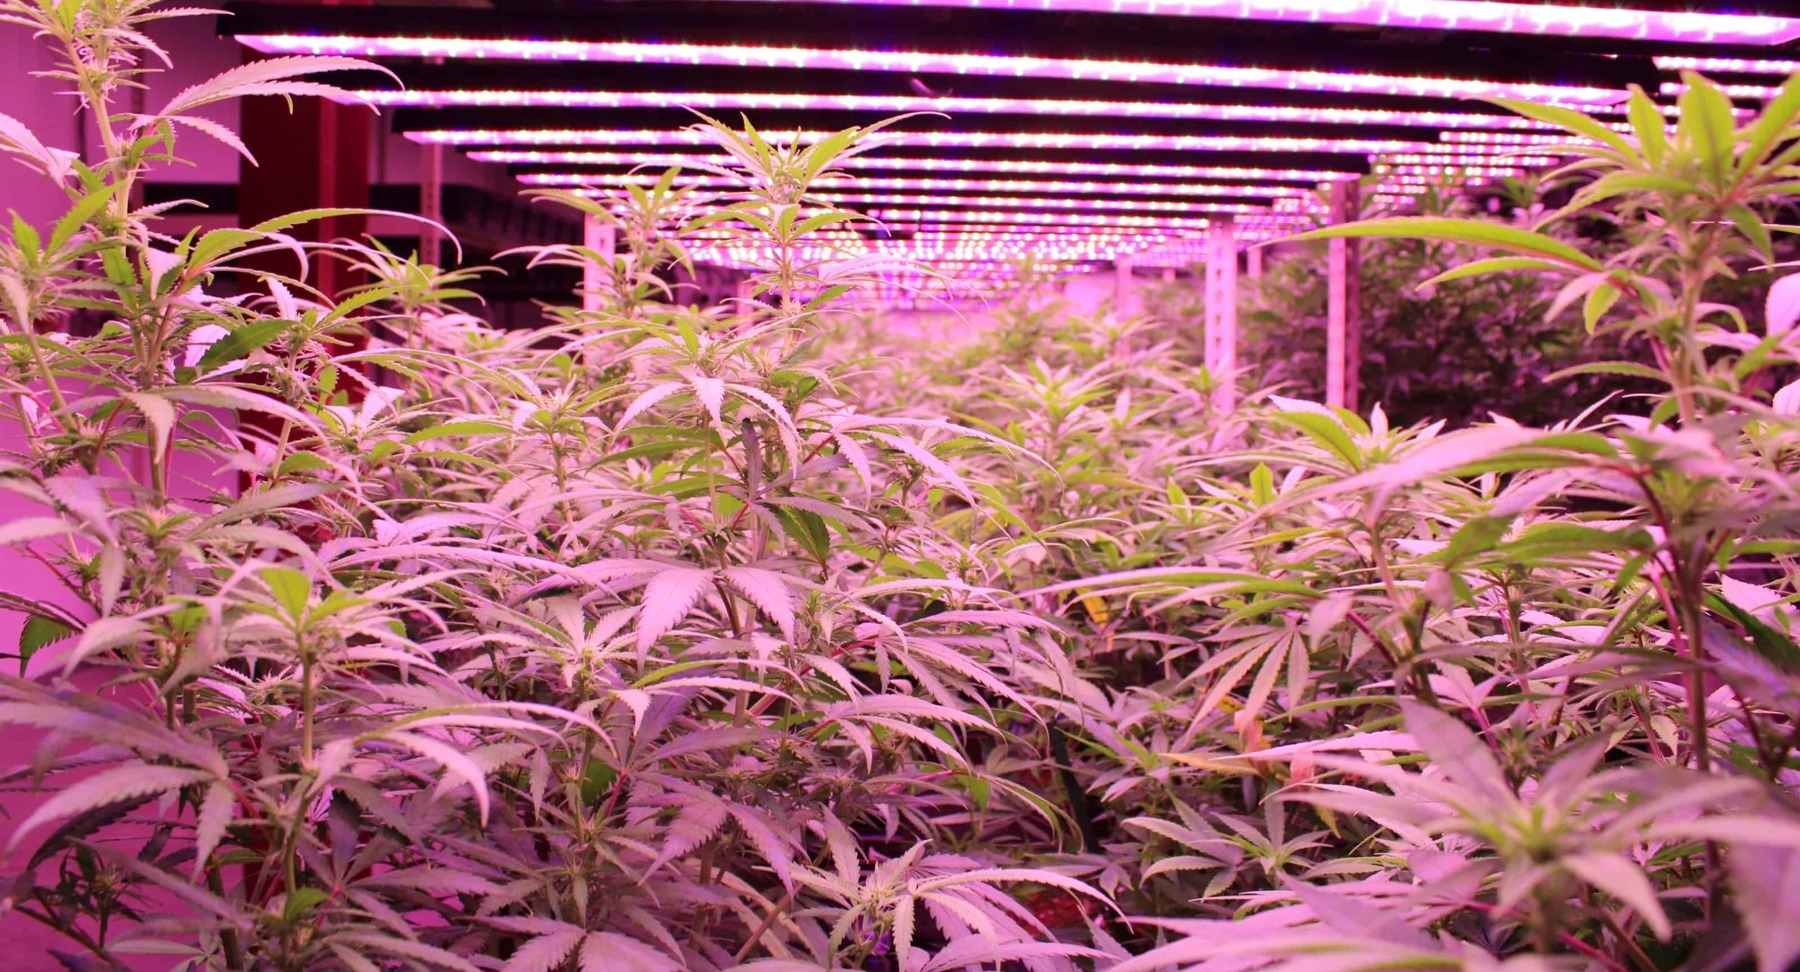 Gibbys Garden - Cannabis Cultivation